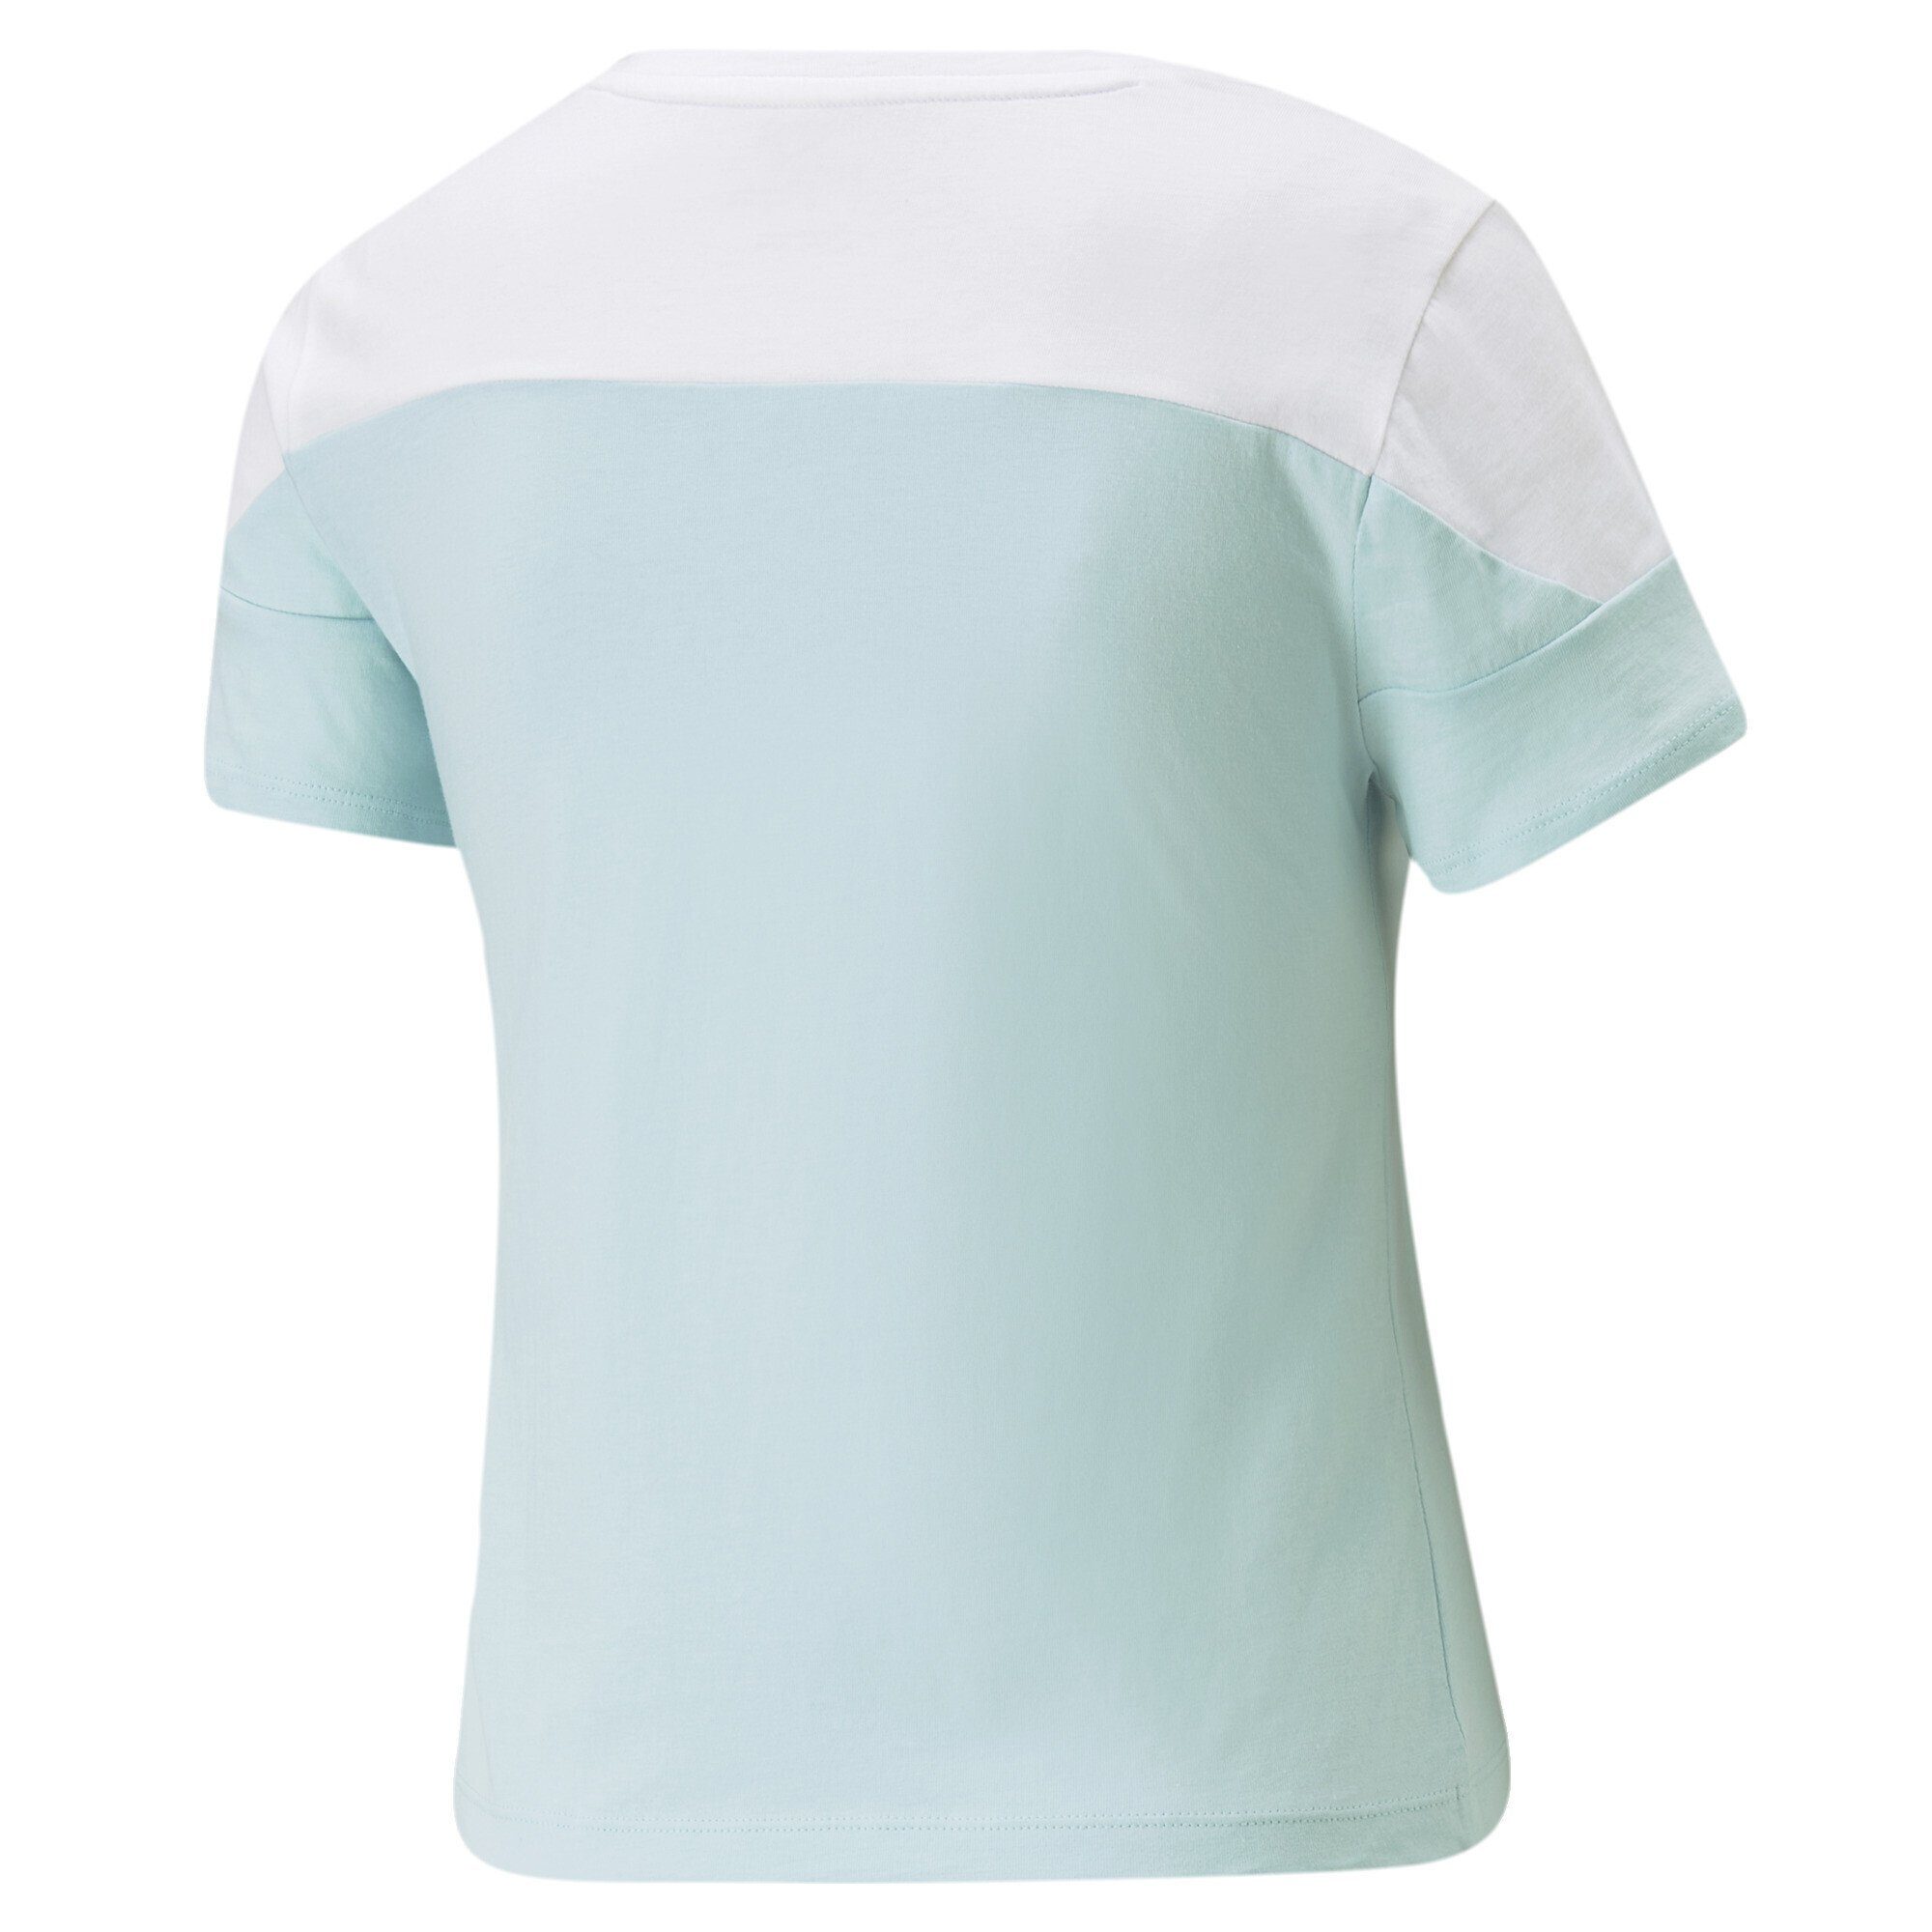 Aqua Blue Block T-Shirt T-Shirt PUMA Damen Around White the Light